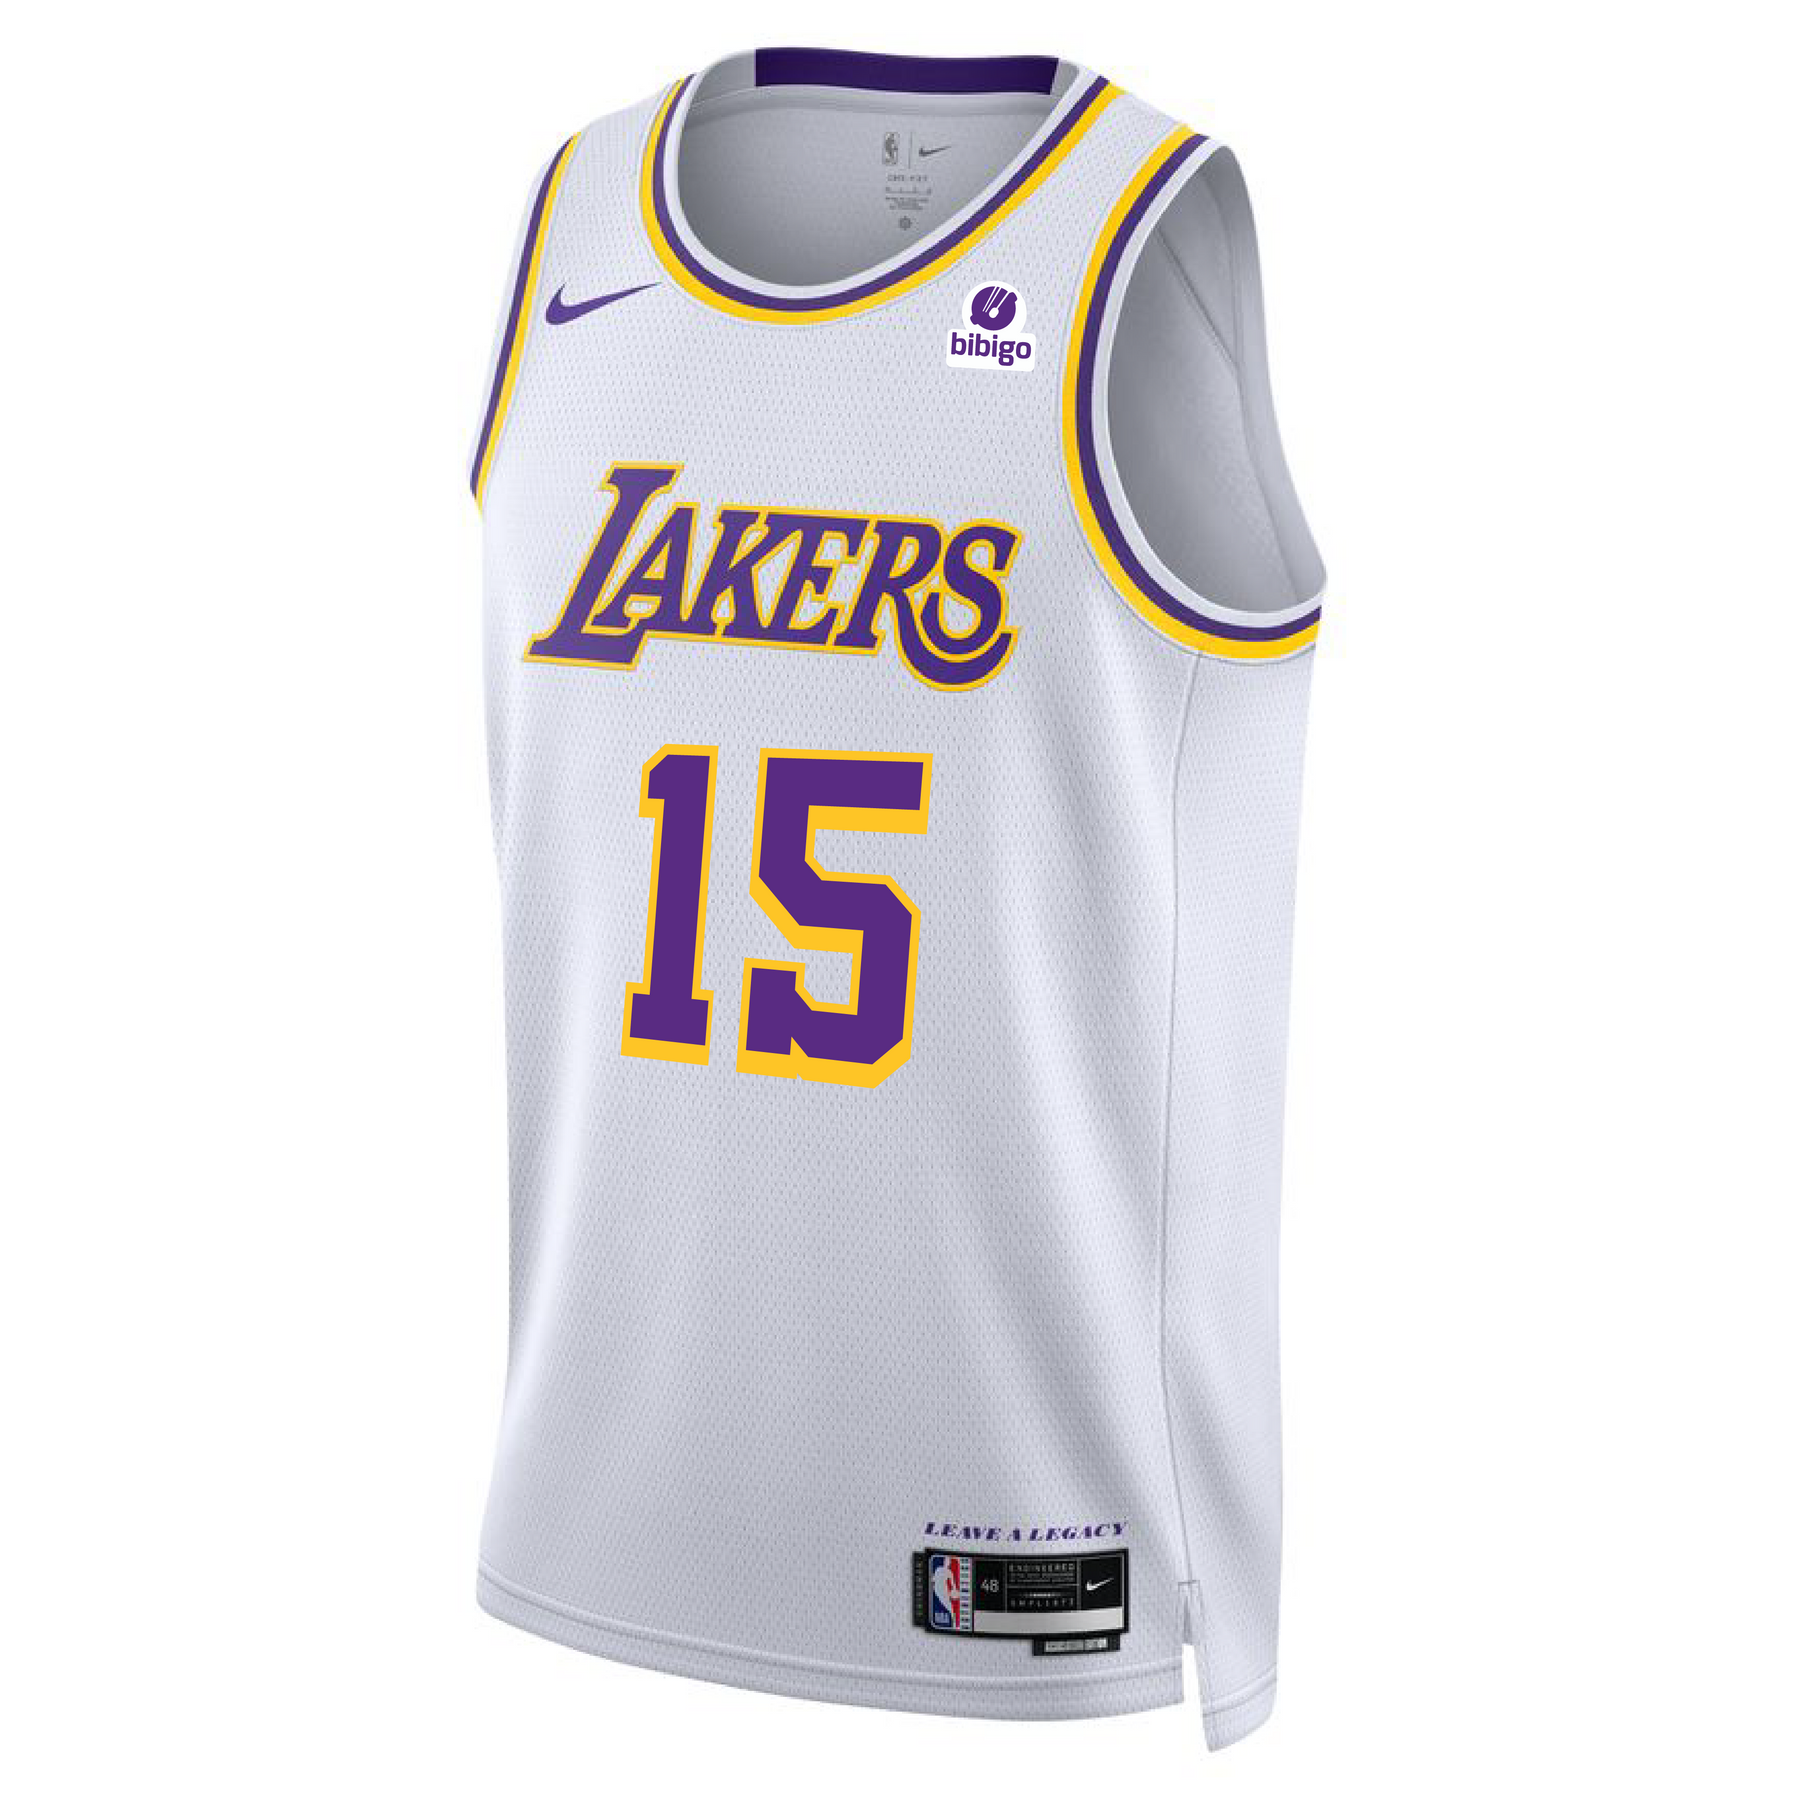 Lakers Jerseys for sale in Austinburg, Ohio